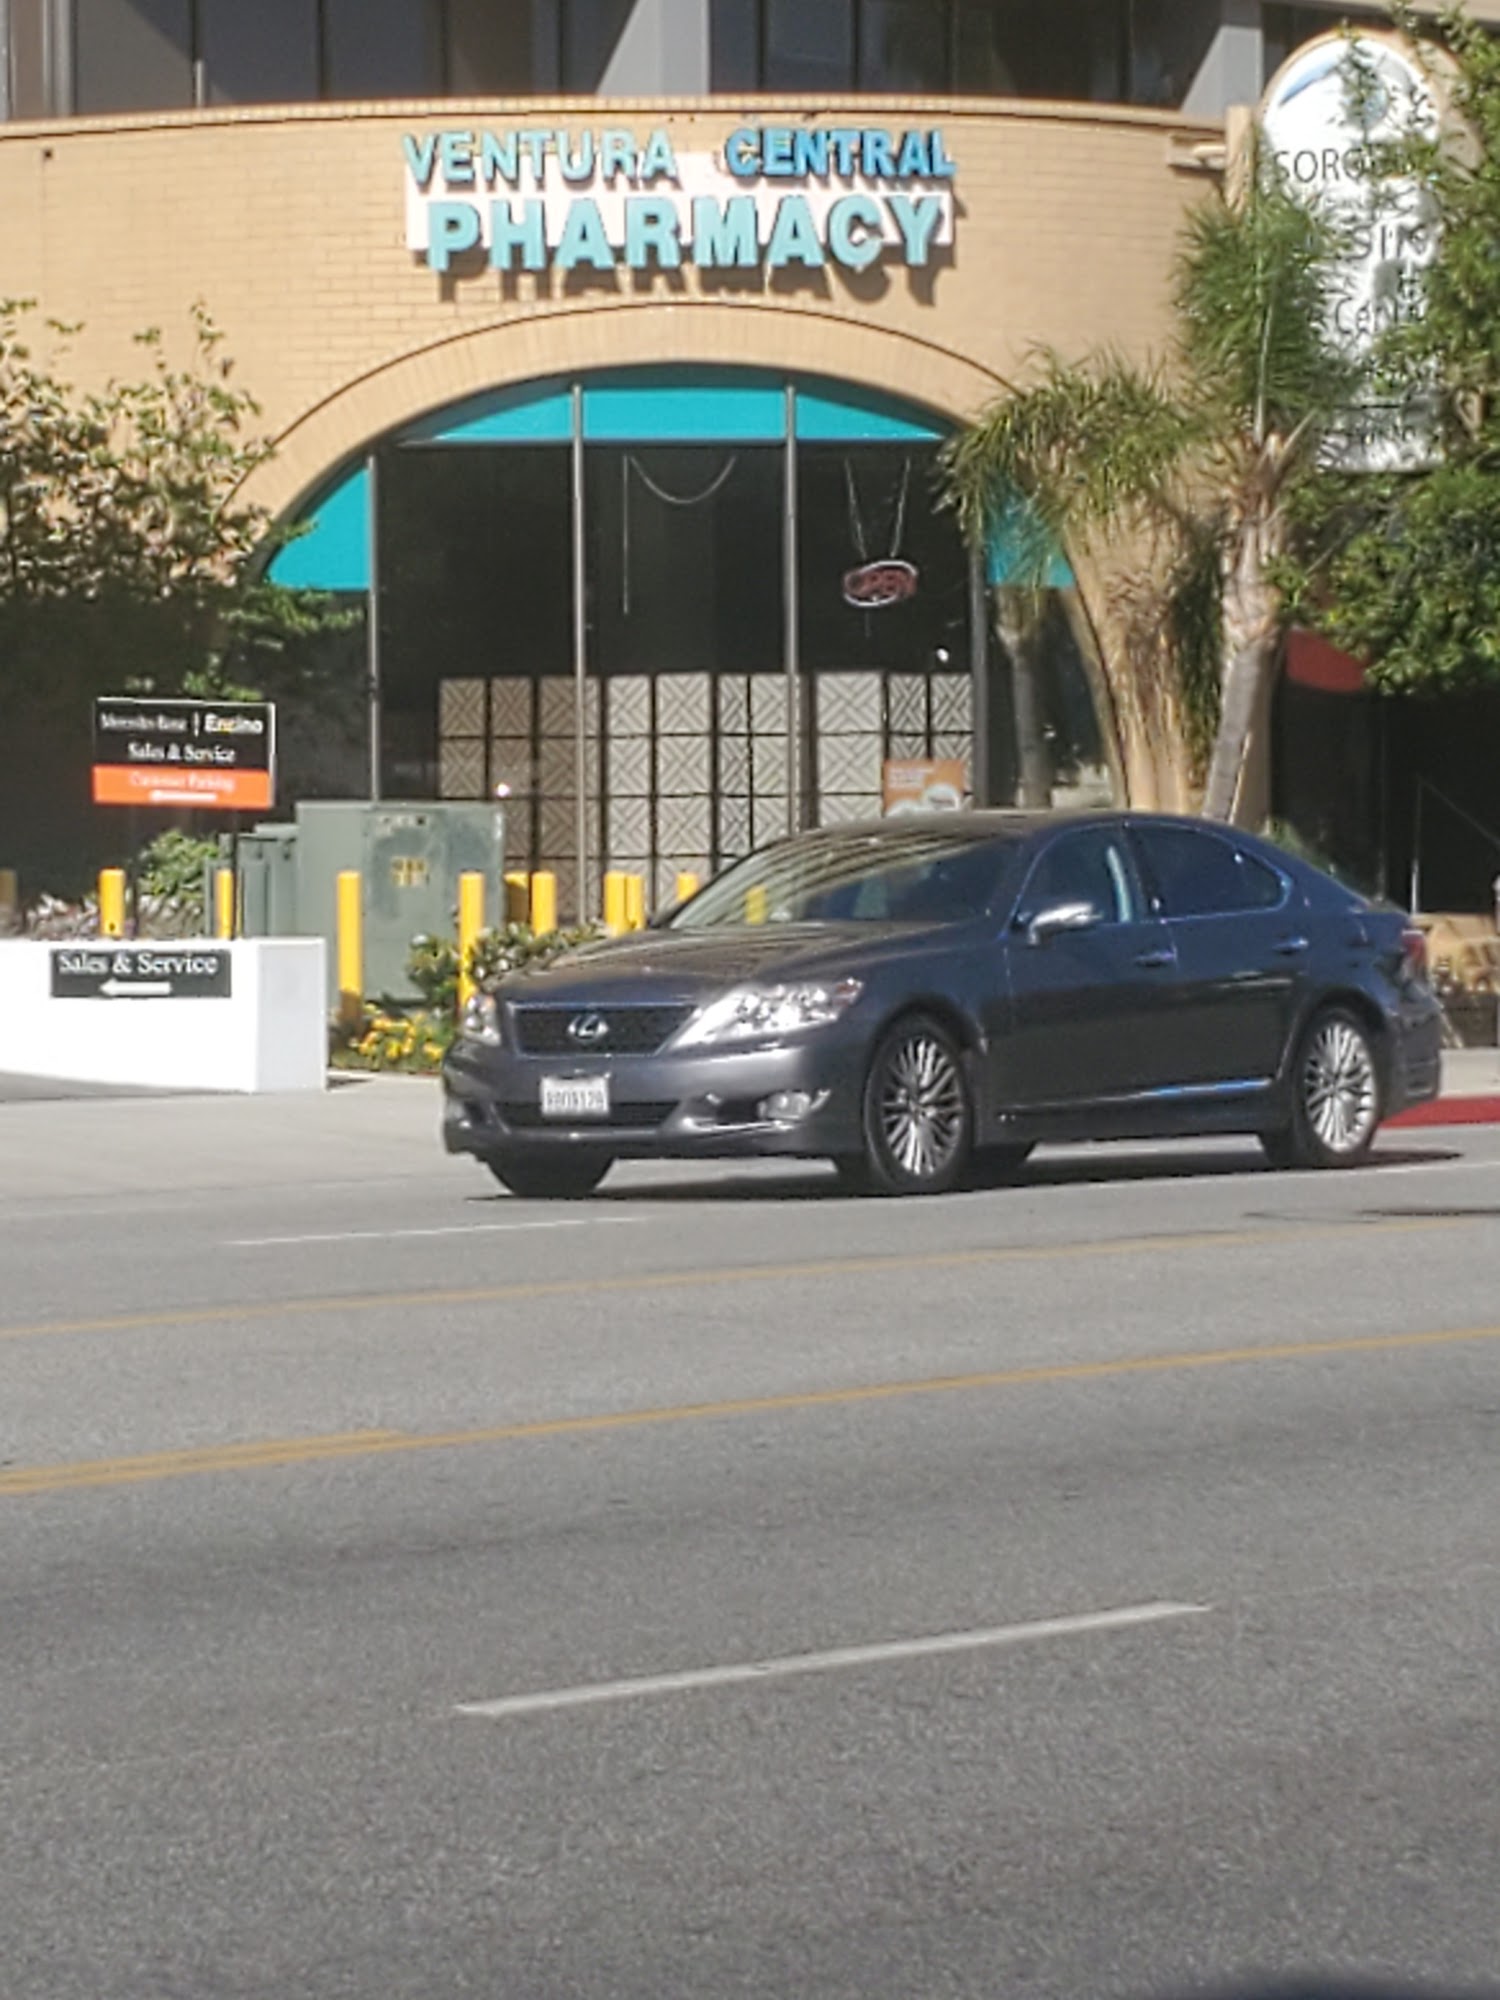 Ventura Central Pharmacy Inc